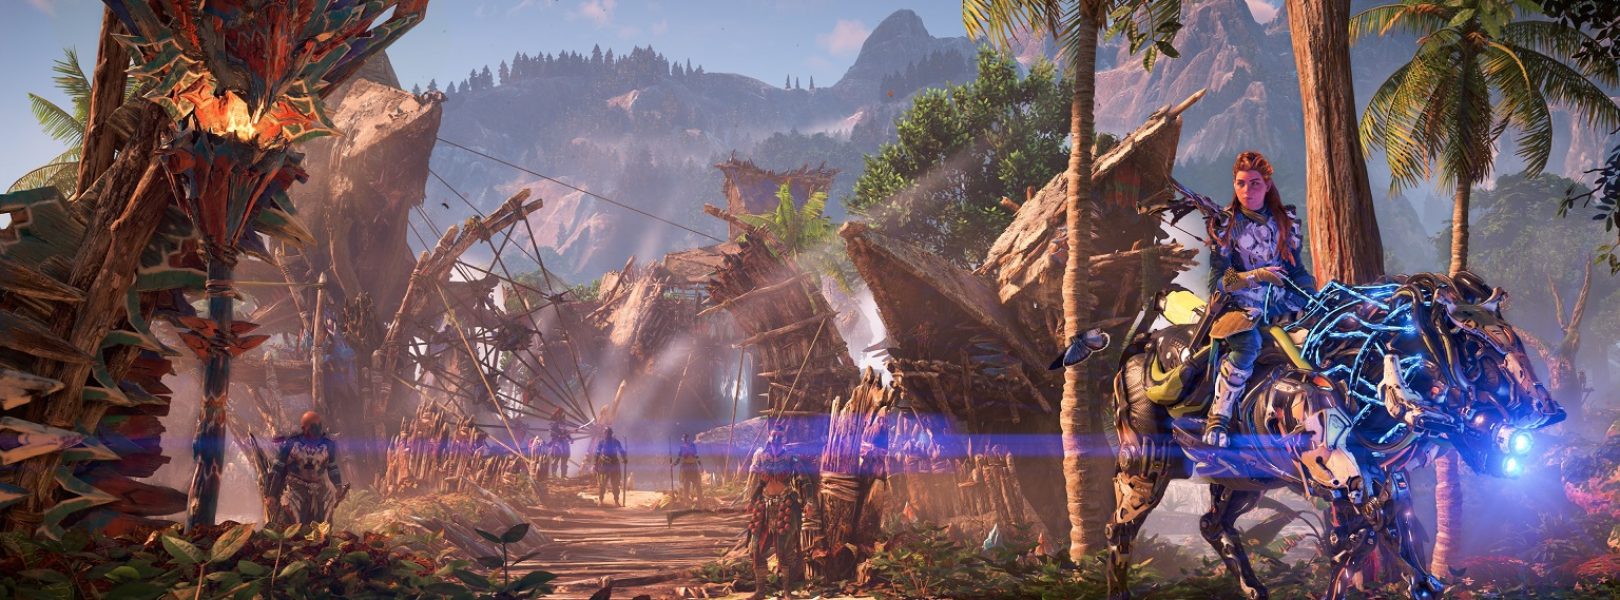 Horizon: Zero Dawn E3 2016 Gameplay Video